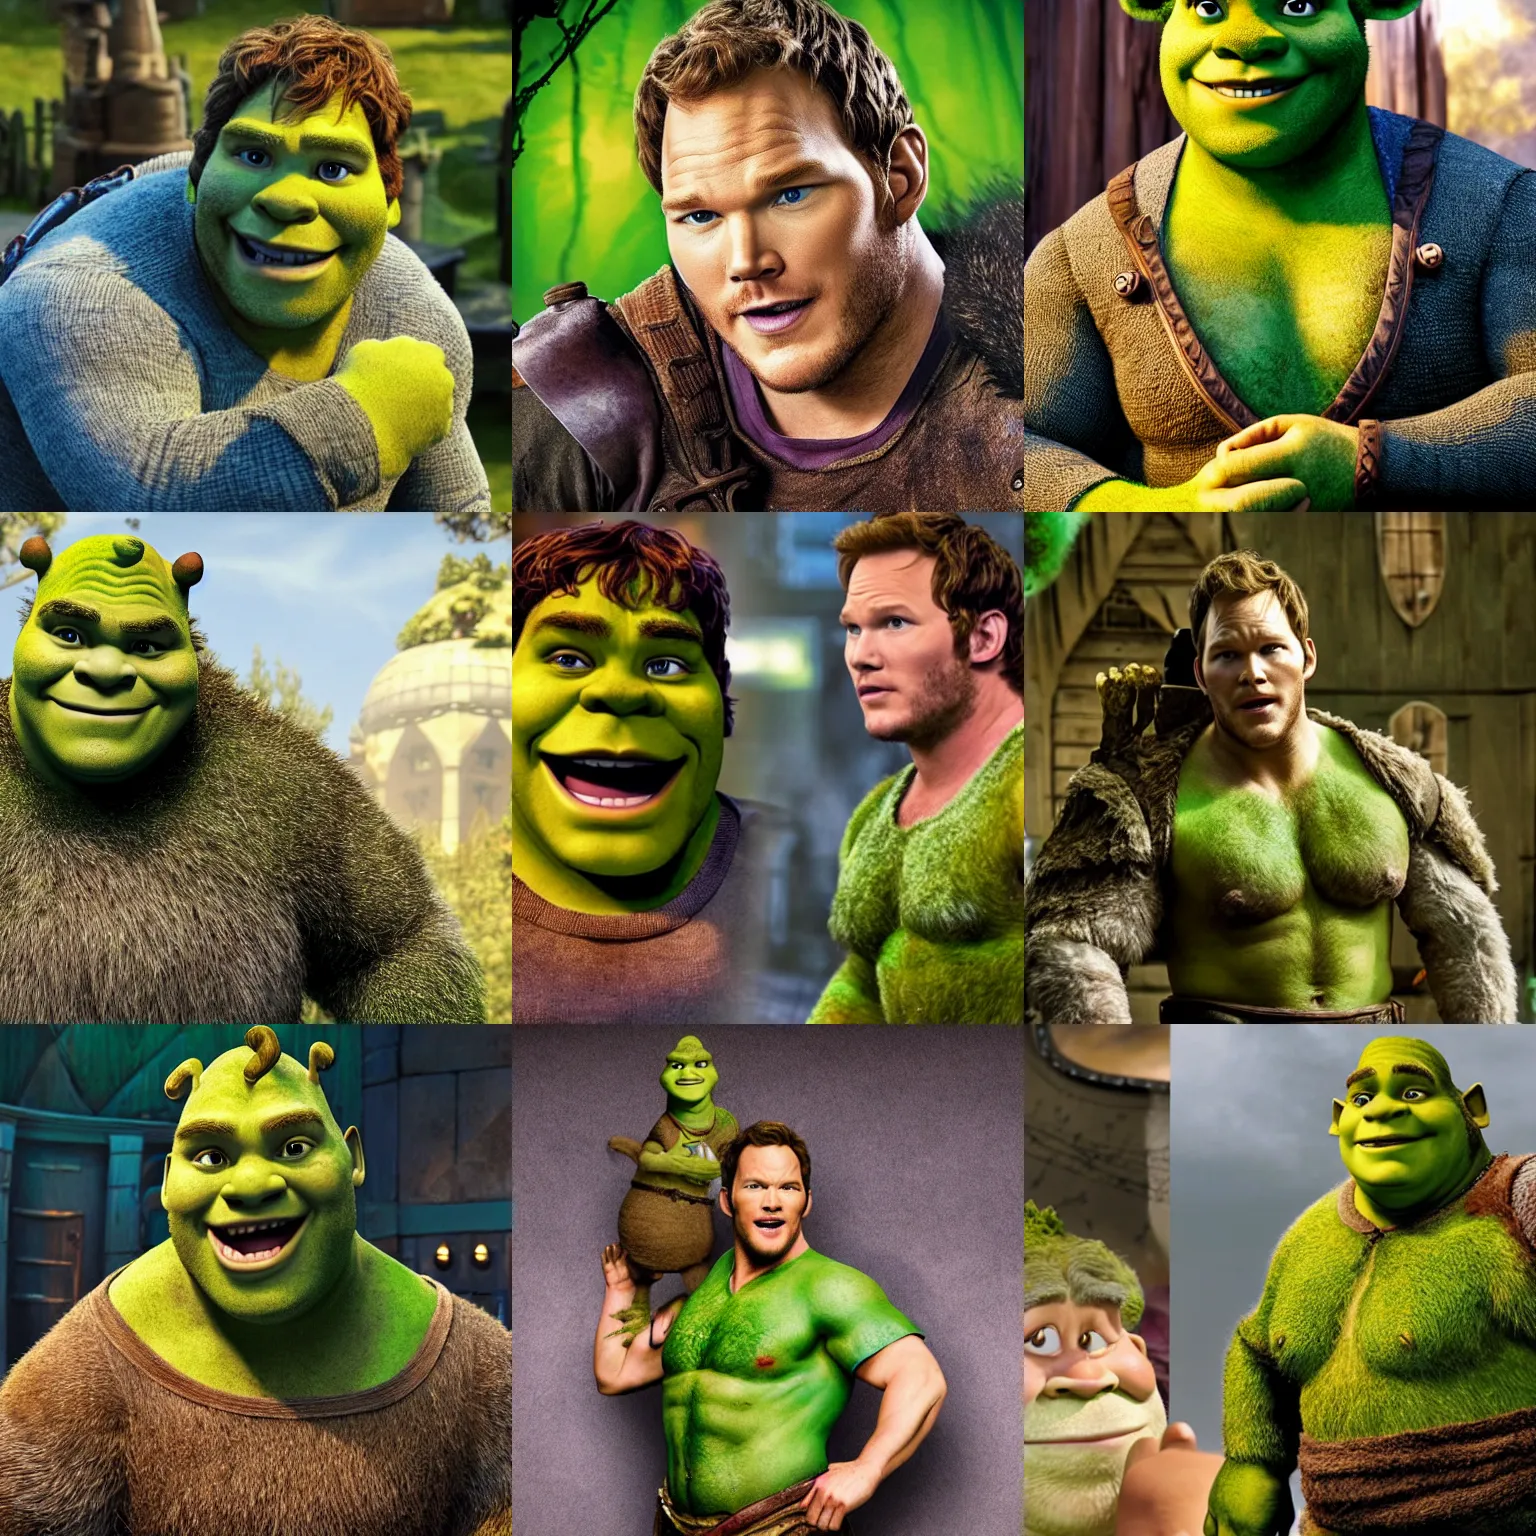 Prompt: Chris Pratt as Shrek, live action set photograph